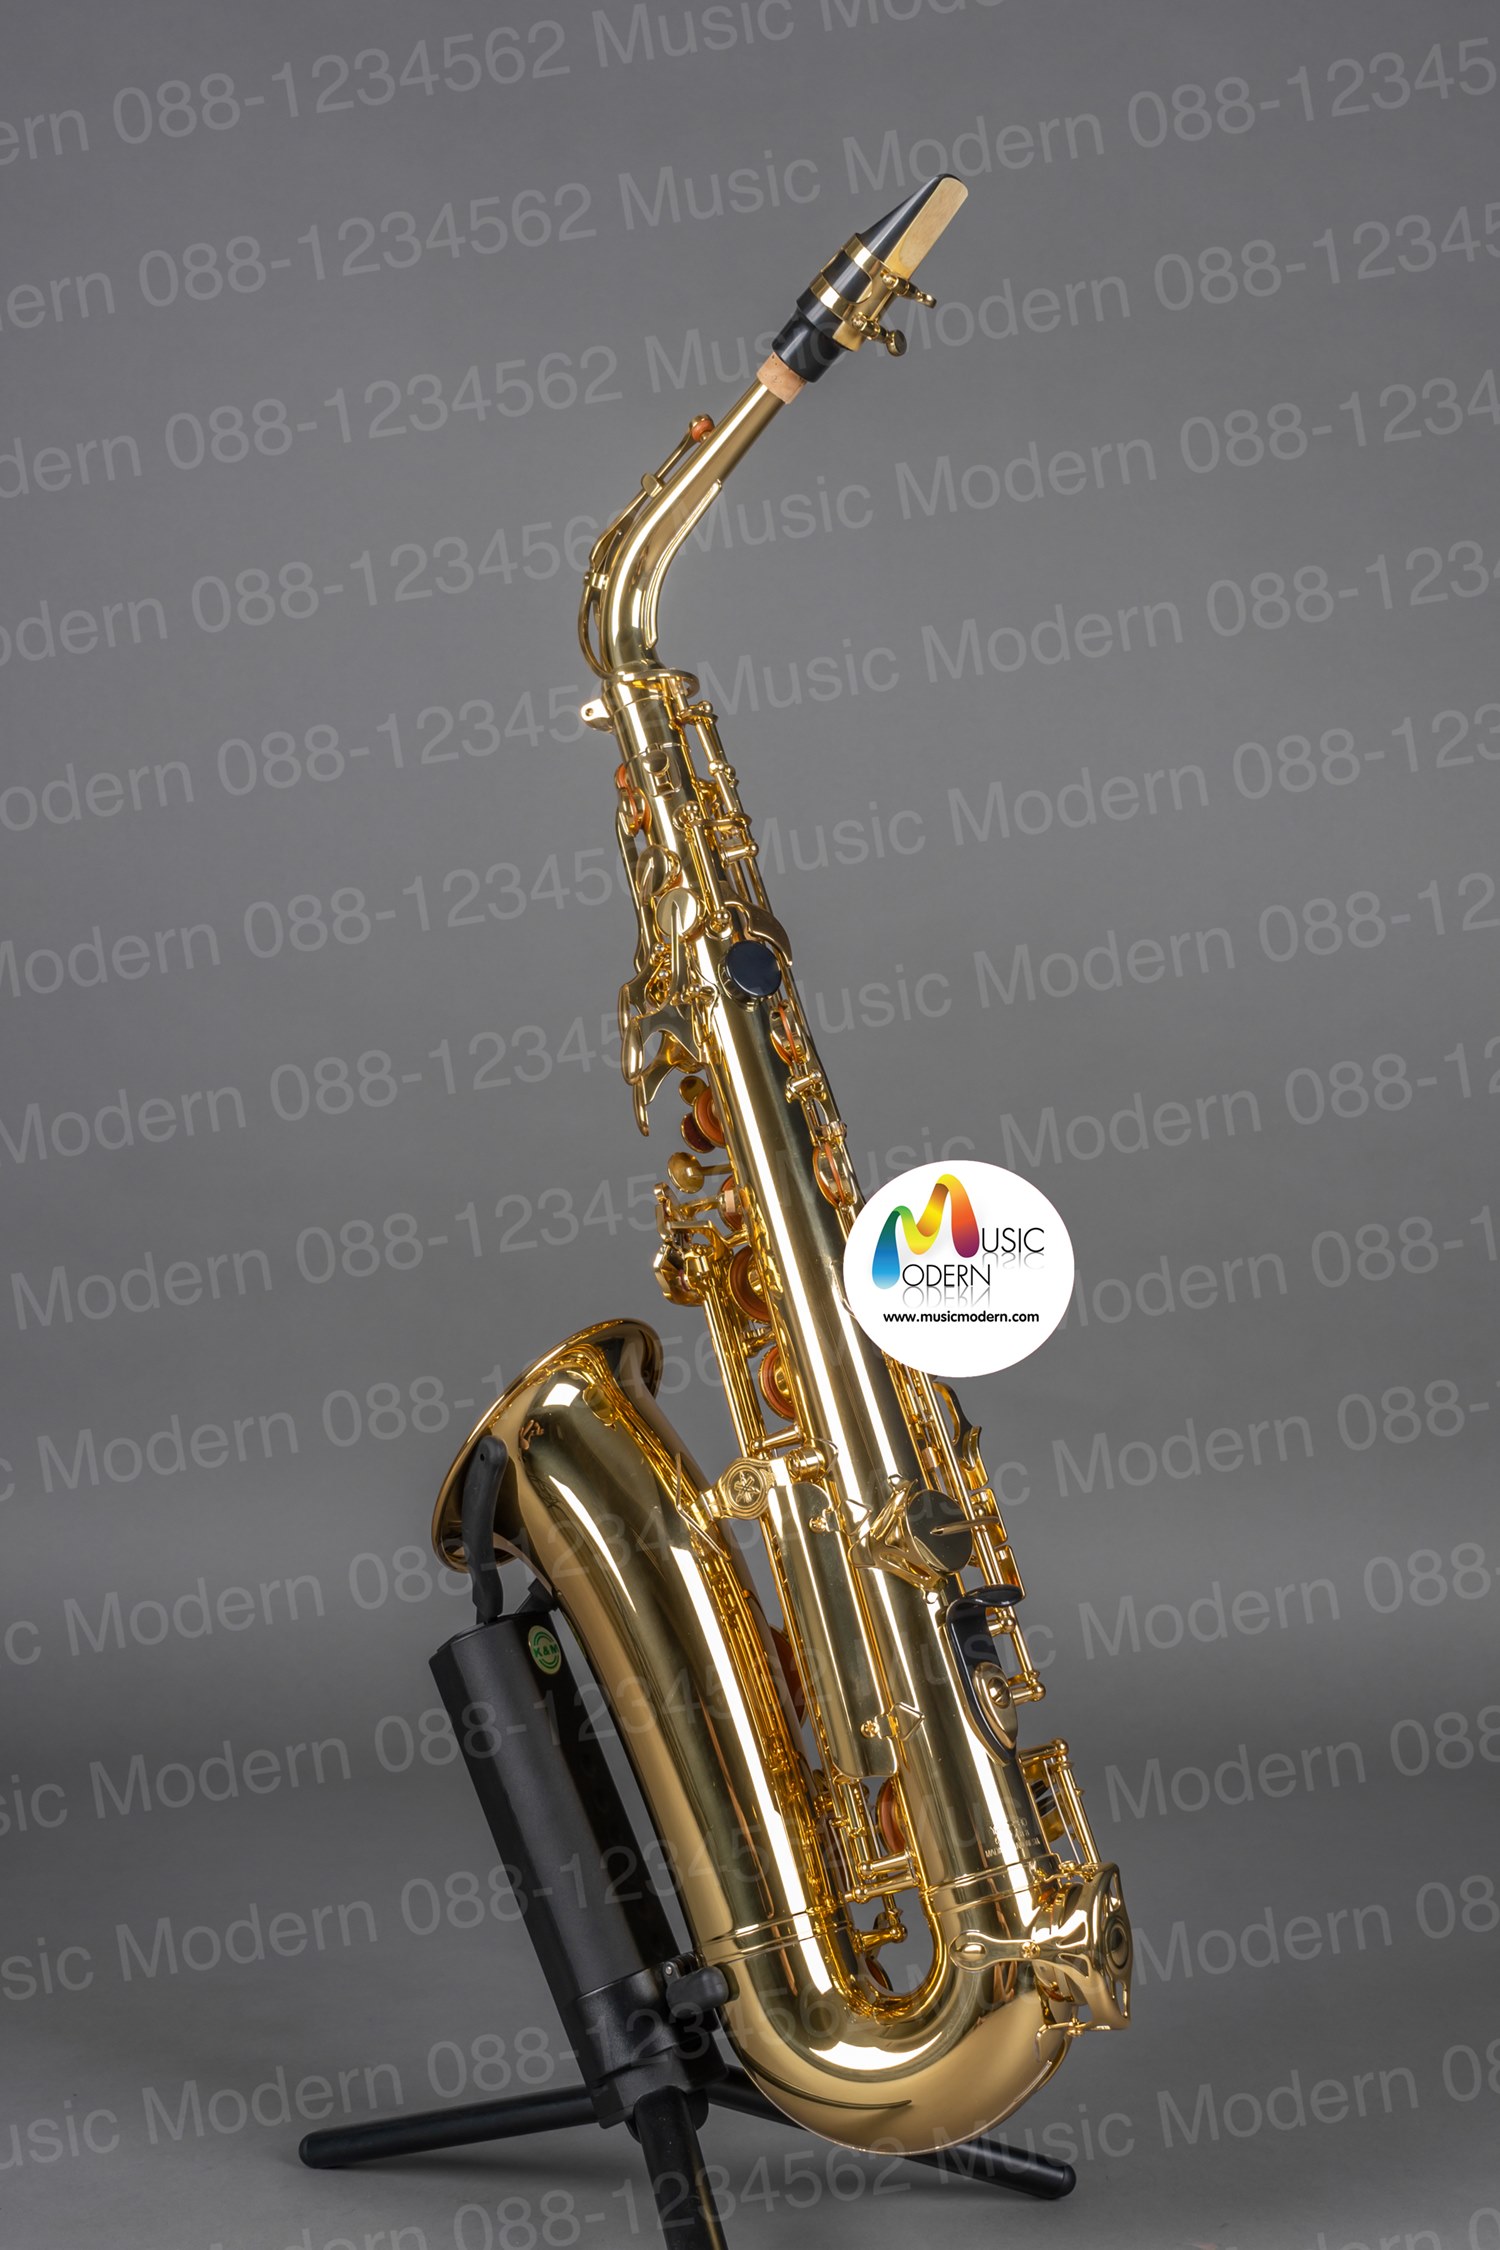 Yamaha Alto Saxophone YAS-280